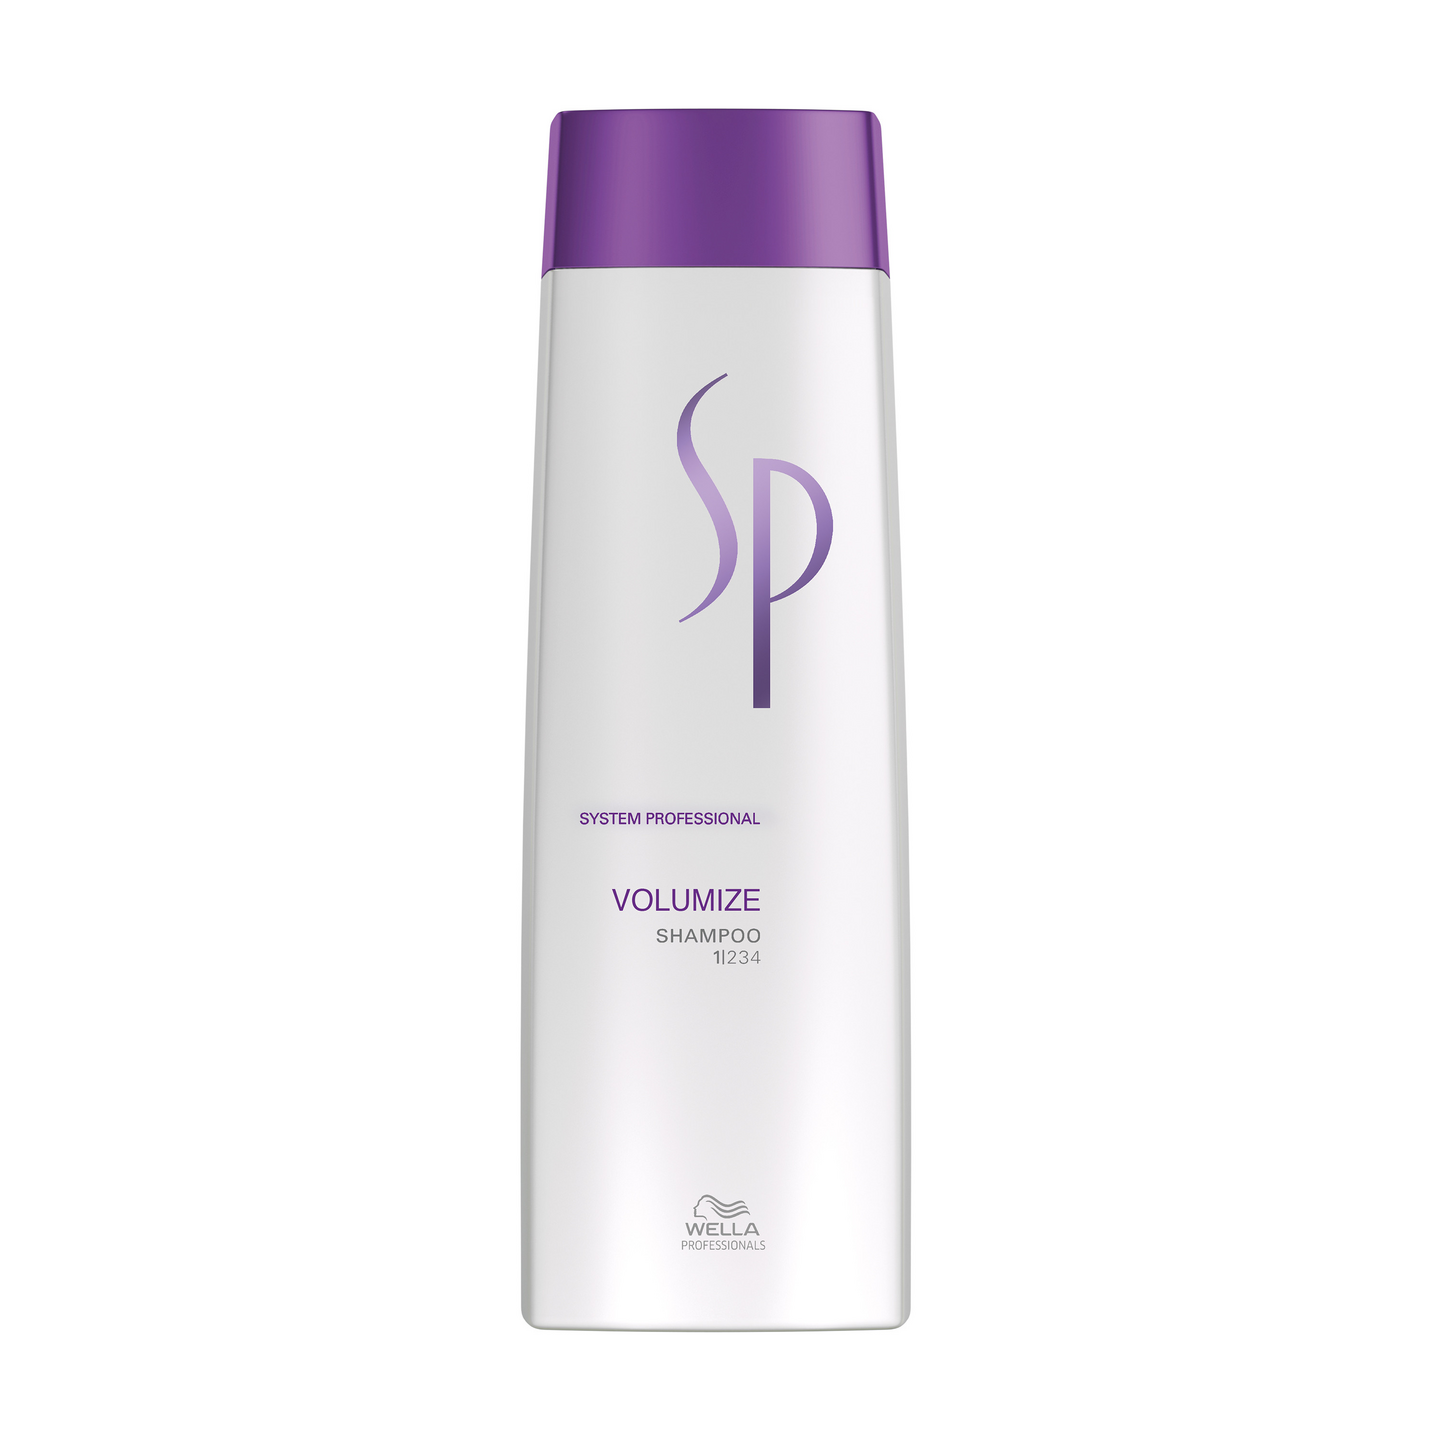 Wella Professional SP shampoo 250ml Volumize